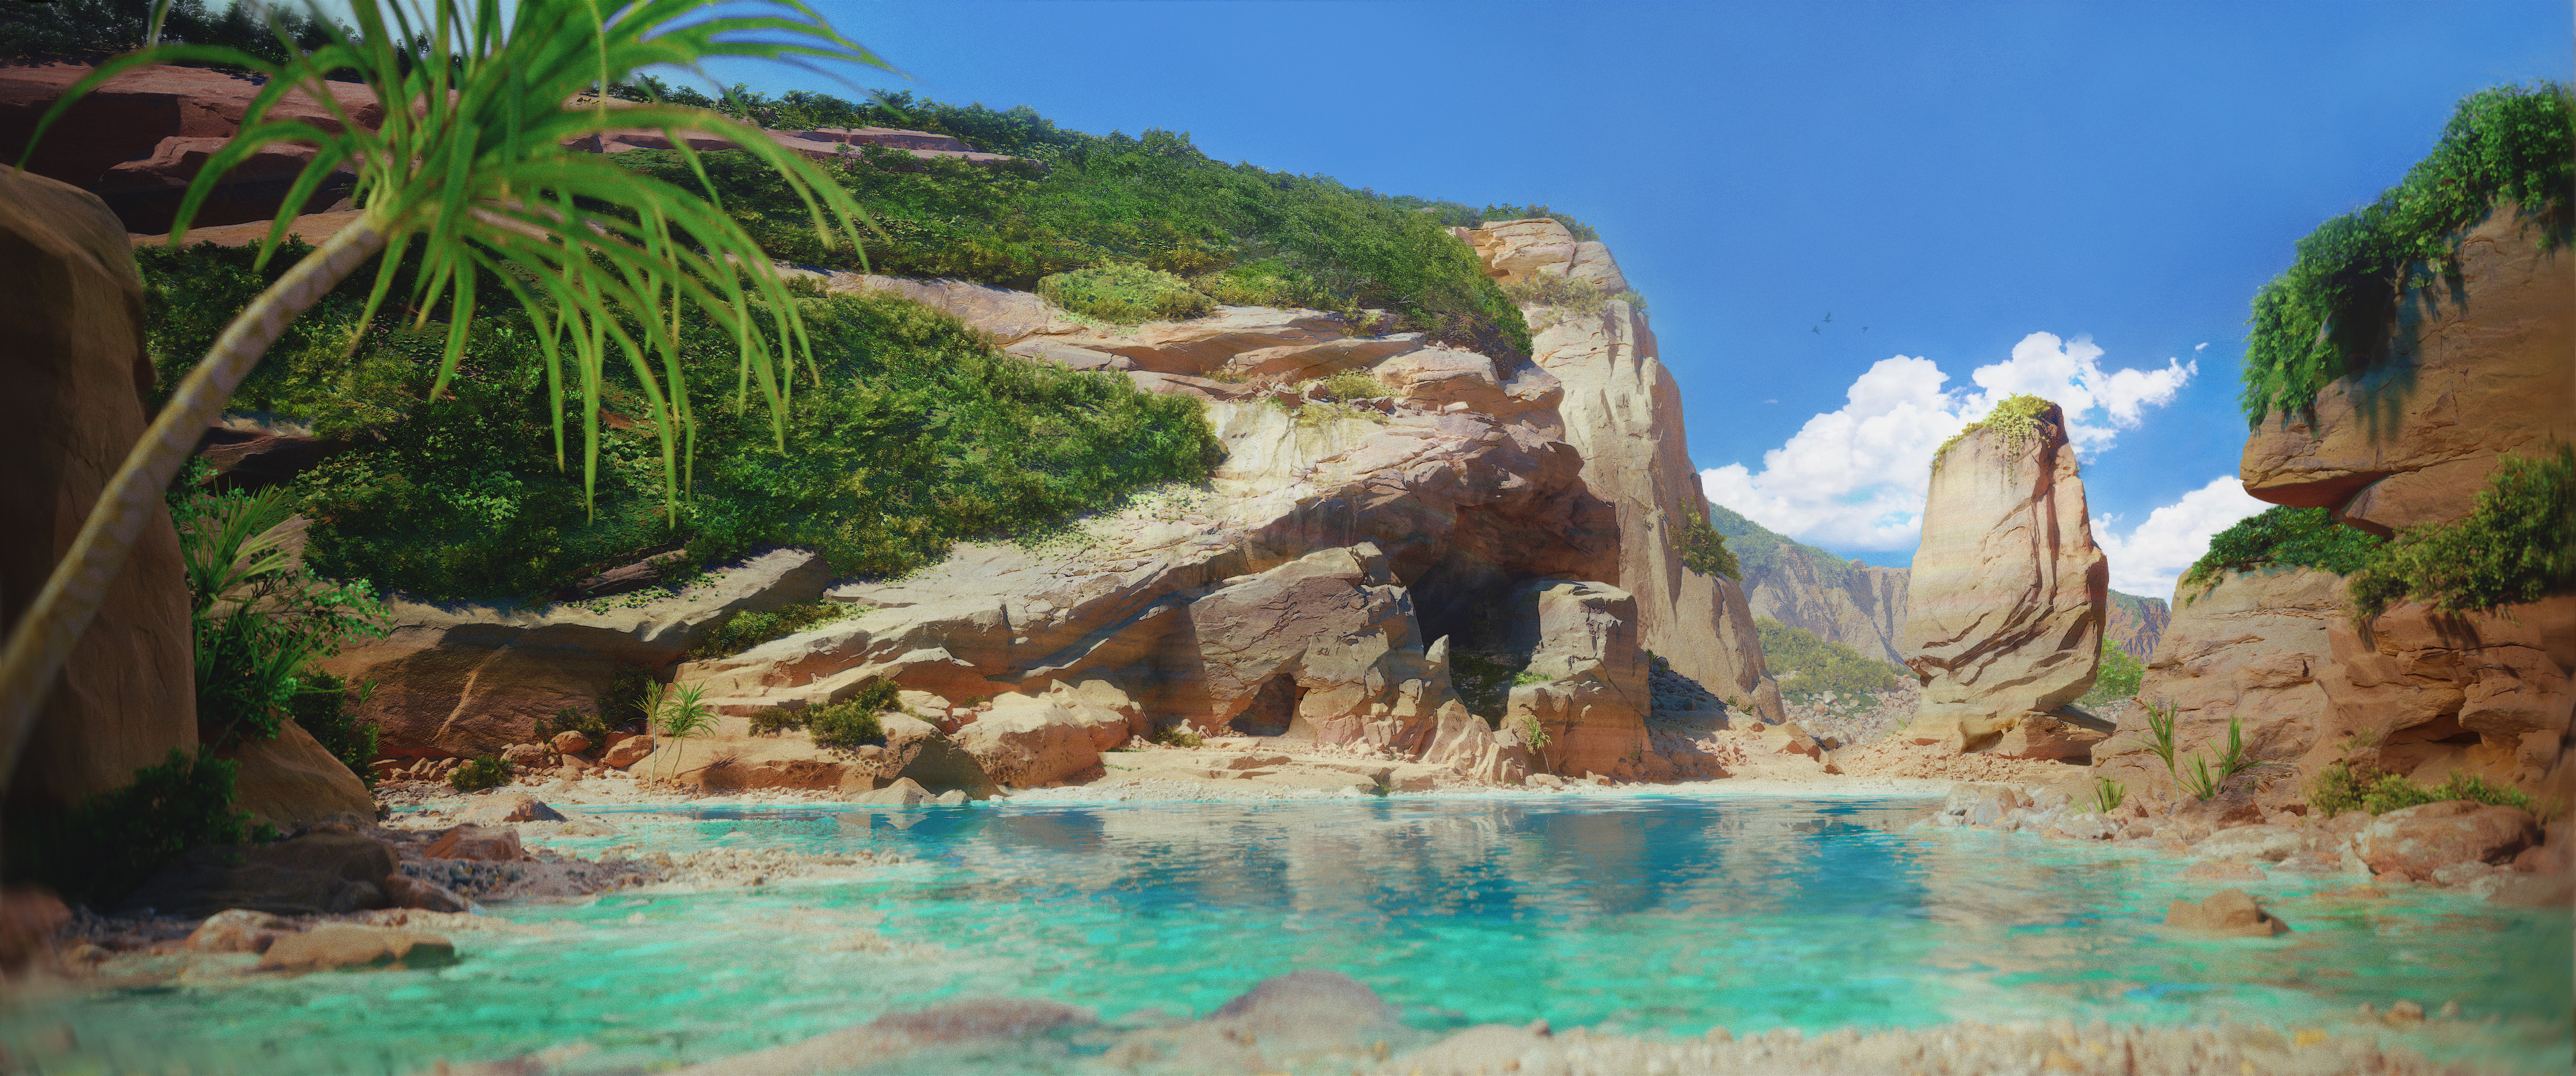 Digital Art Artwork Illustration CGi Unreal Engine 5 Landscape Rock Formation Nature Water Sea Palm  3840x1604